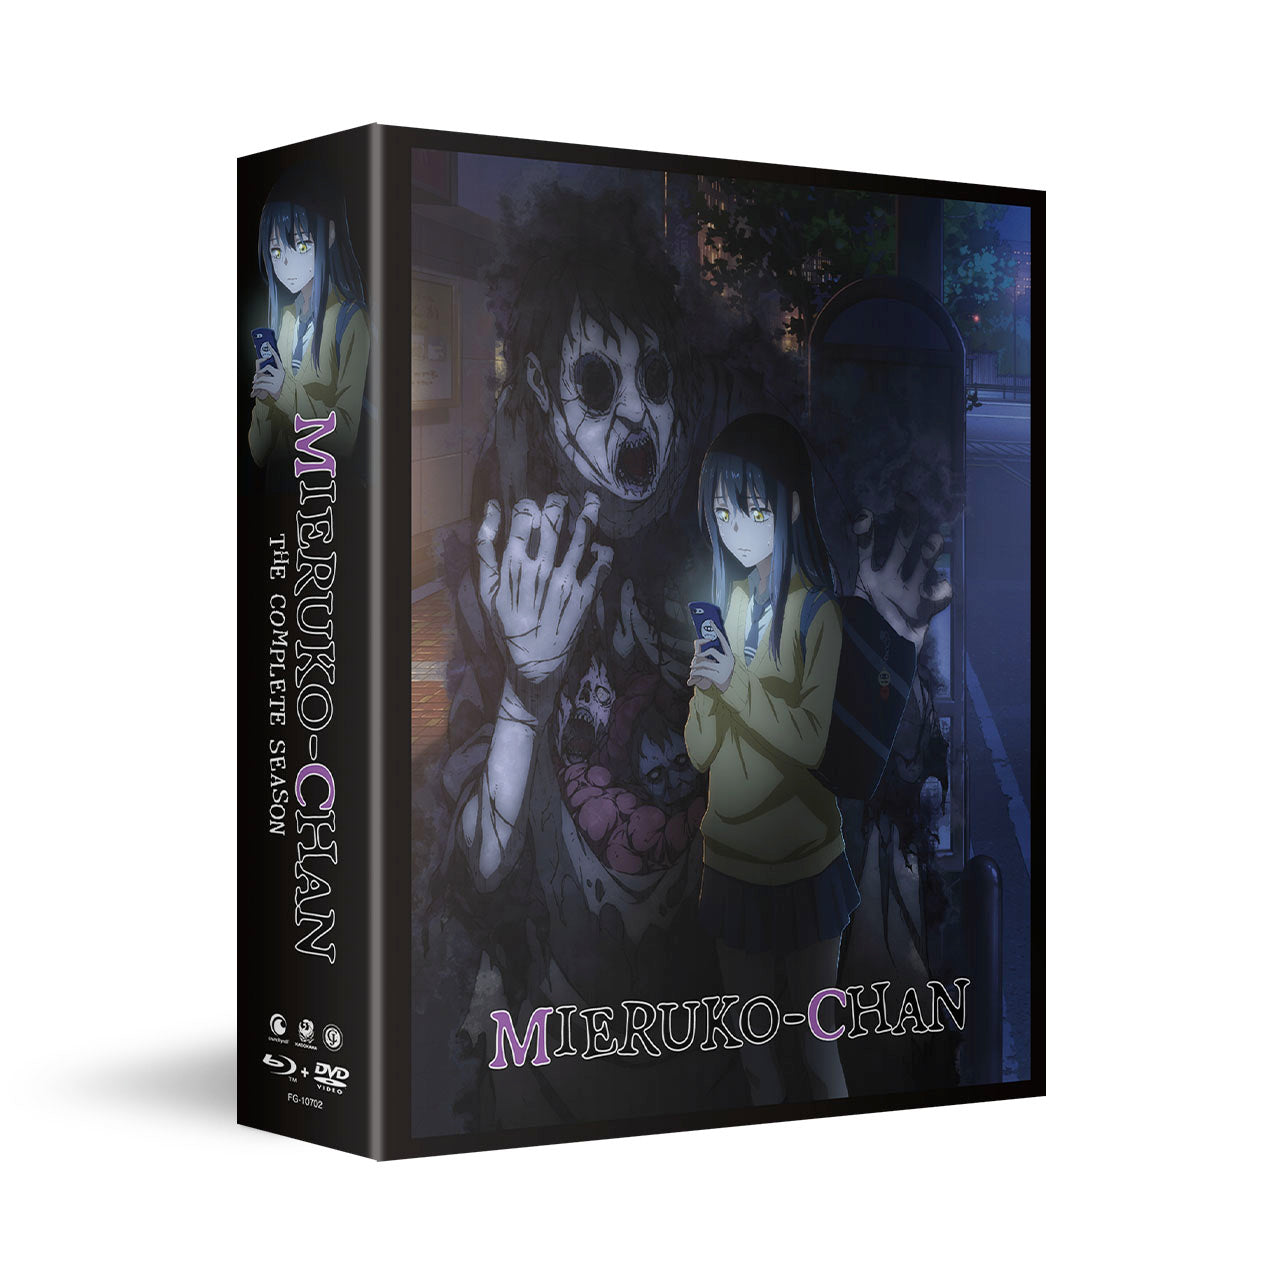 Mieruko-chan - The Complete Season - BD/DVD - LE image count 4